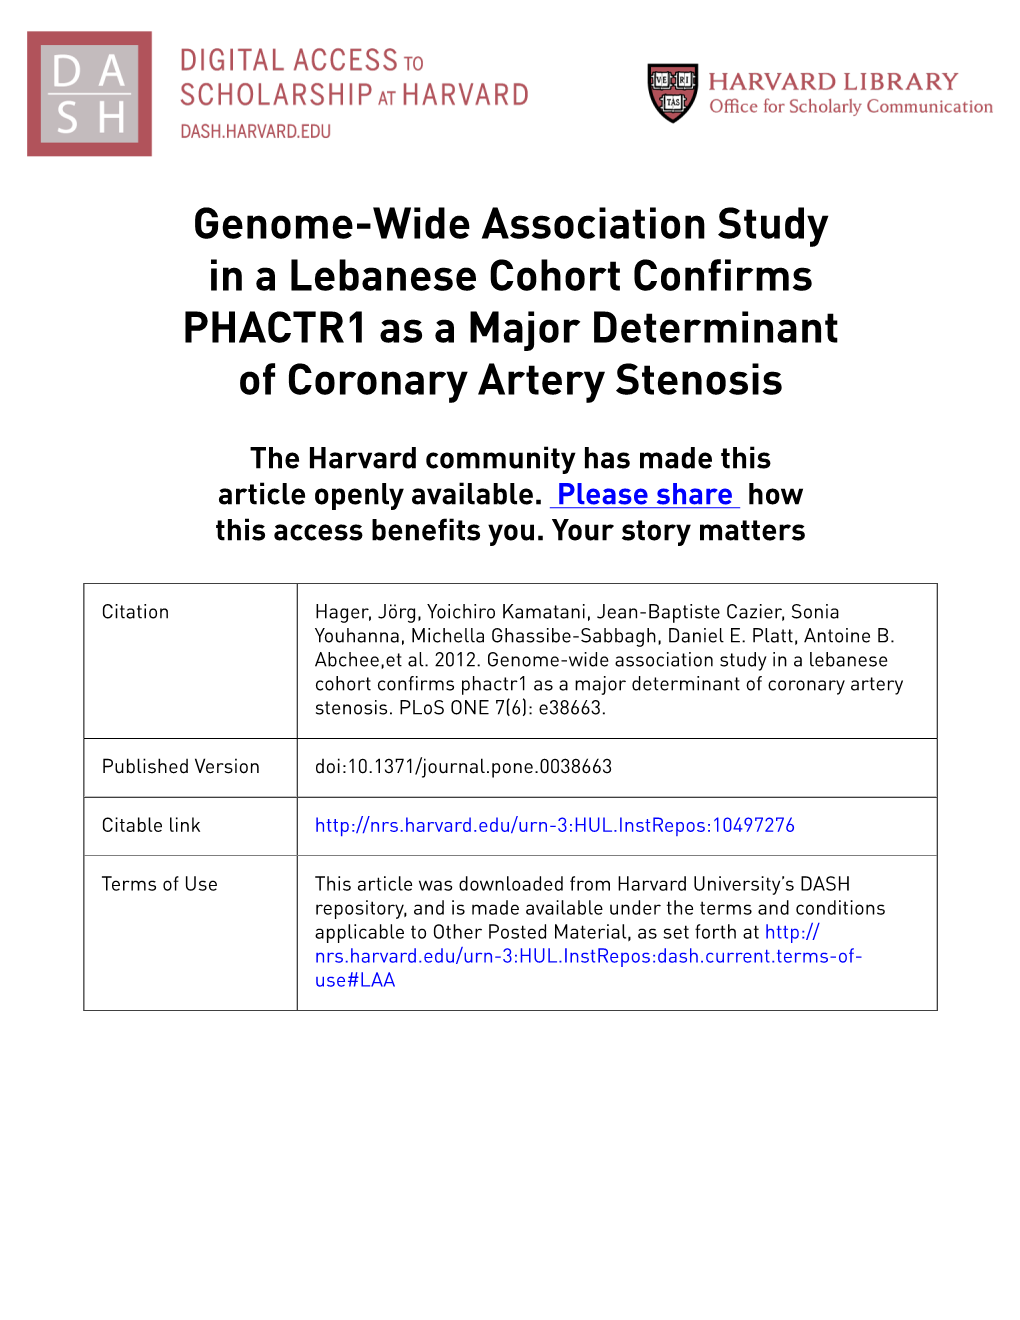 Genome-Wide Association Study in a Lebanese Cohort Confirms PHACTR1 As a Major Determinant of Coronary Artery Stenosis